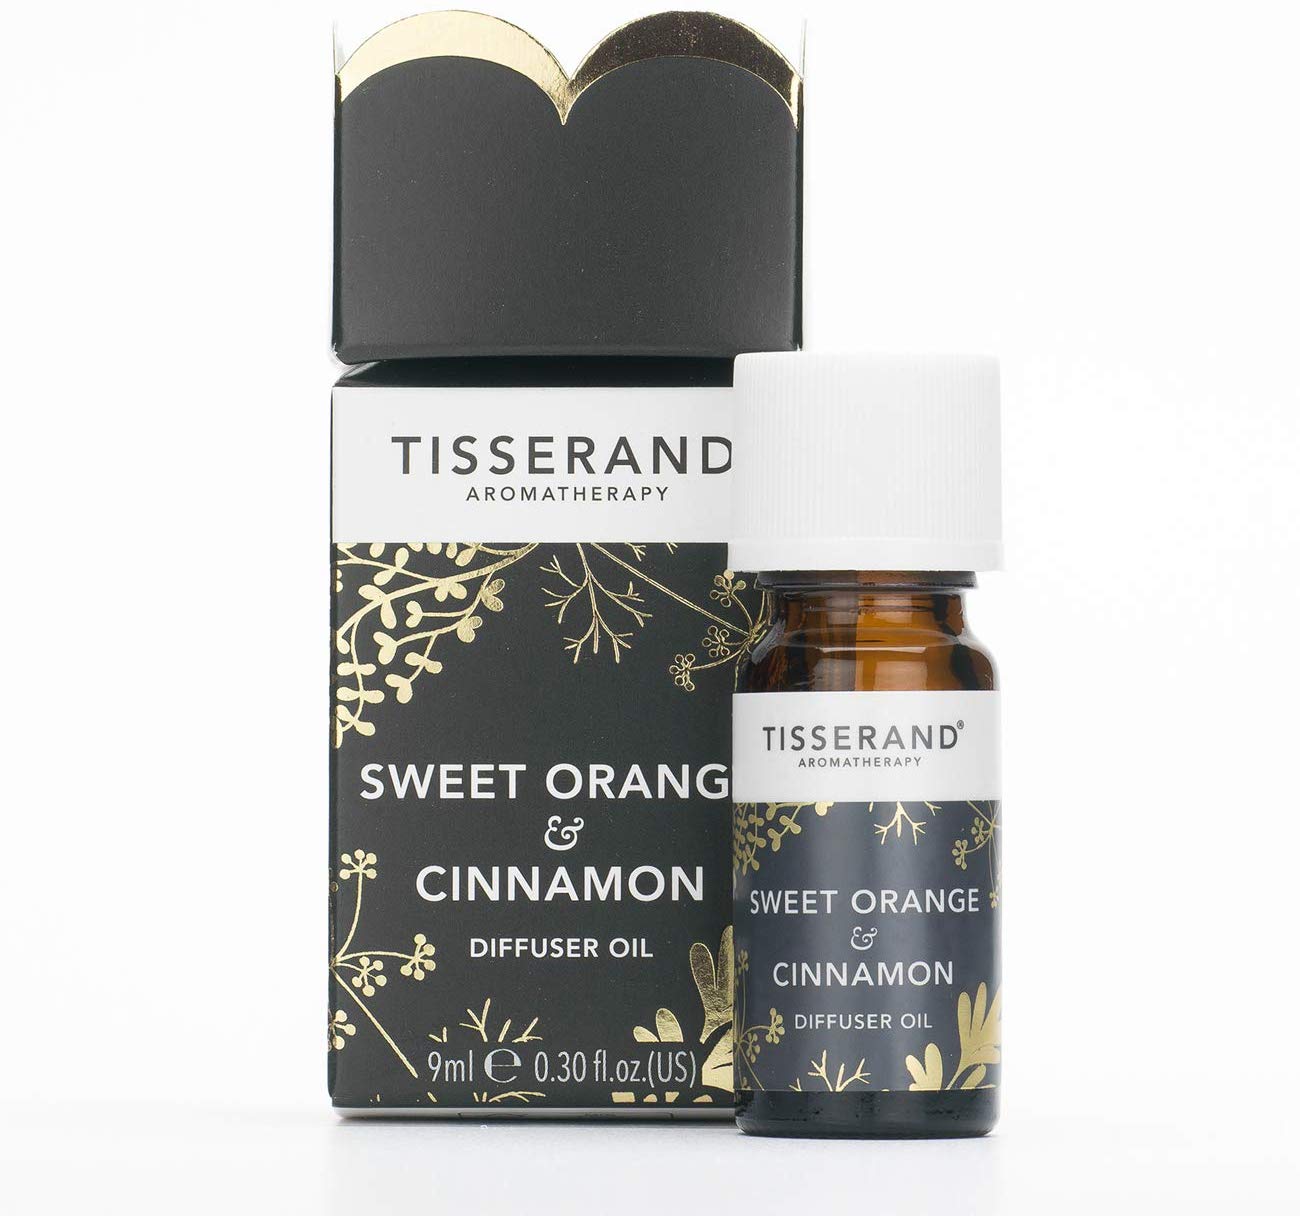 Tisserand Aromatherapy Sweet Orange & Cinnamon Diffuser Oil